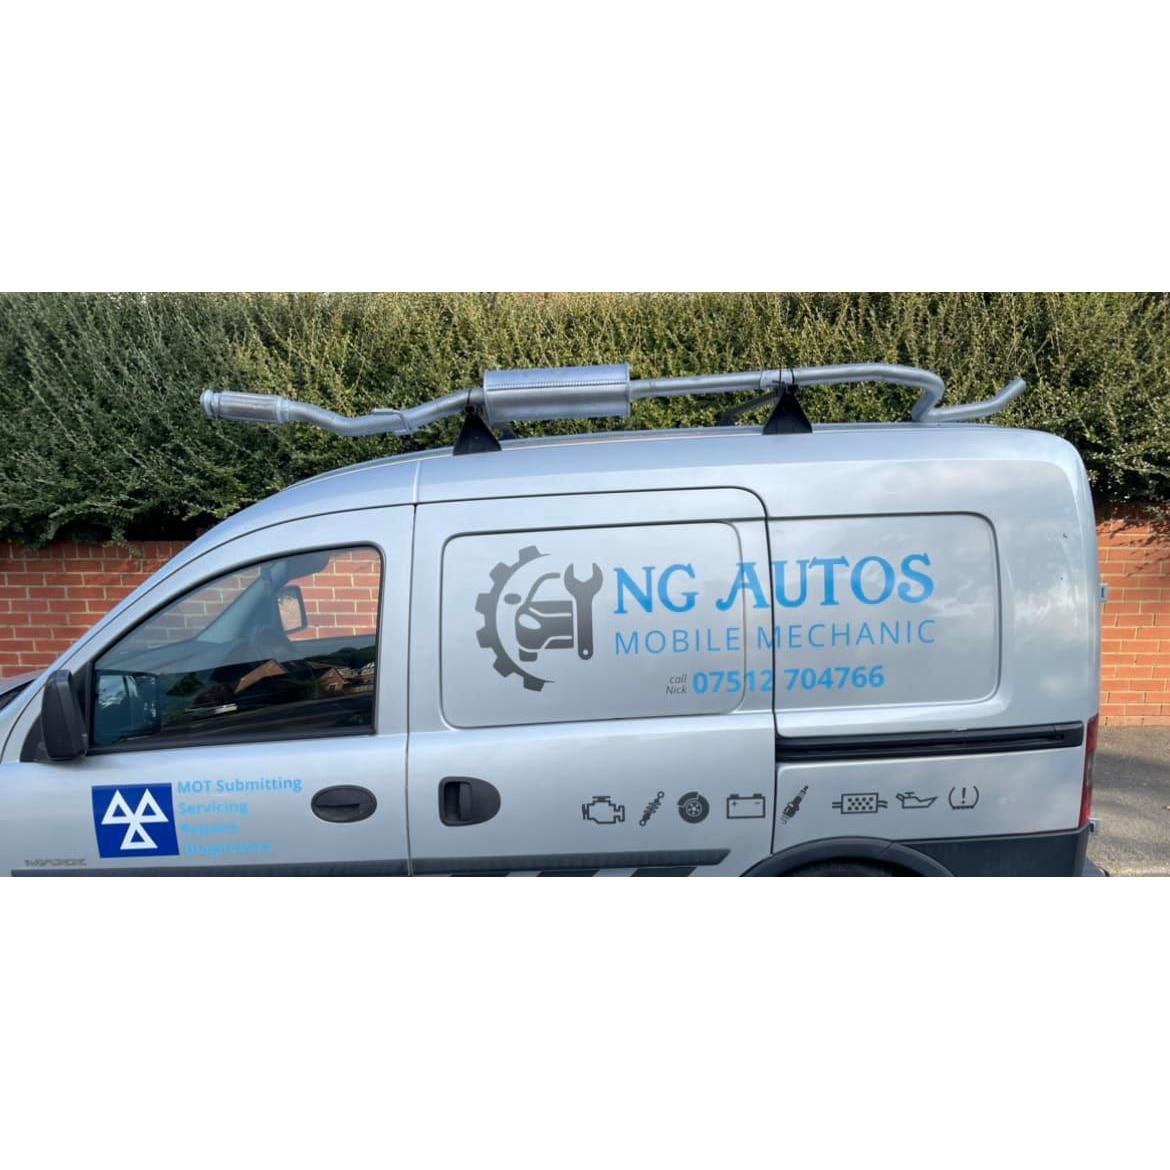 N G Auto's Mobile Mechanic Logo